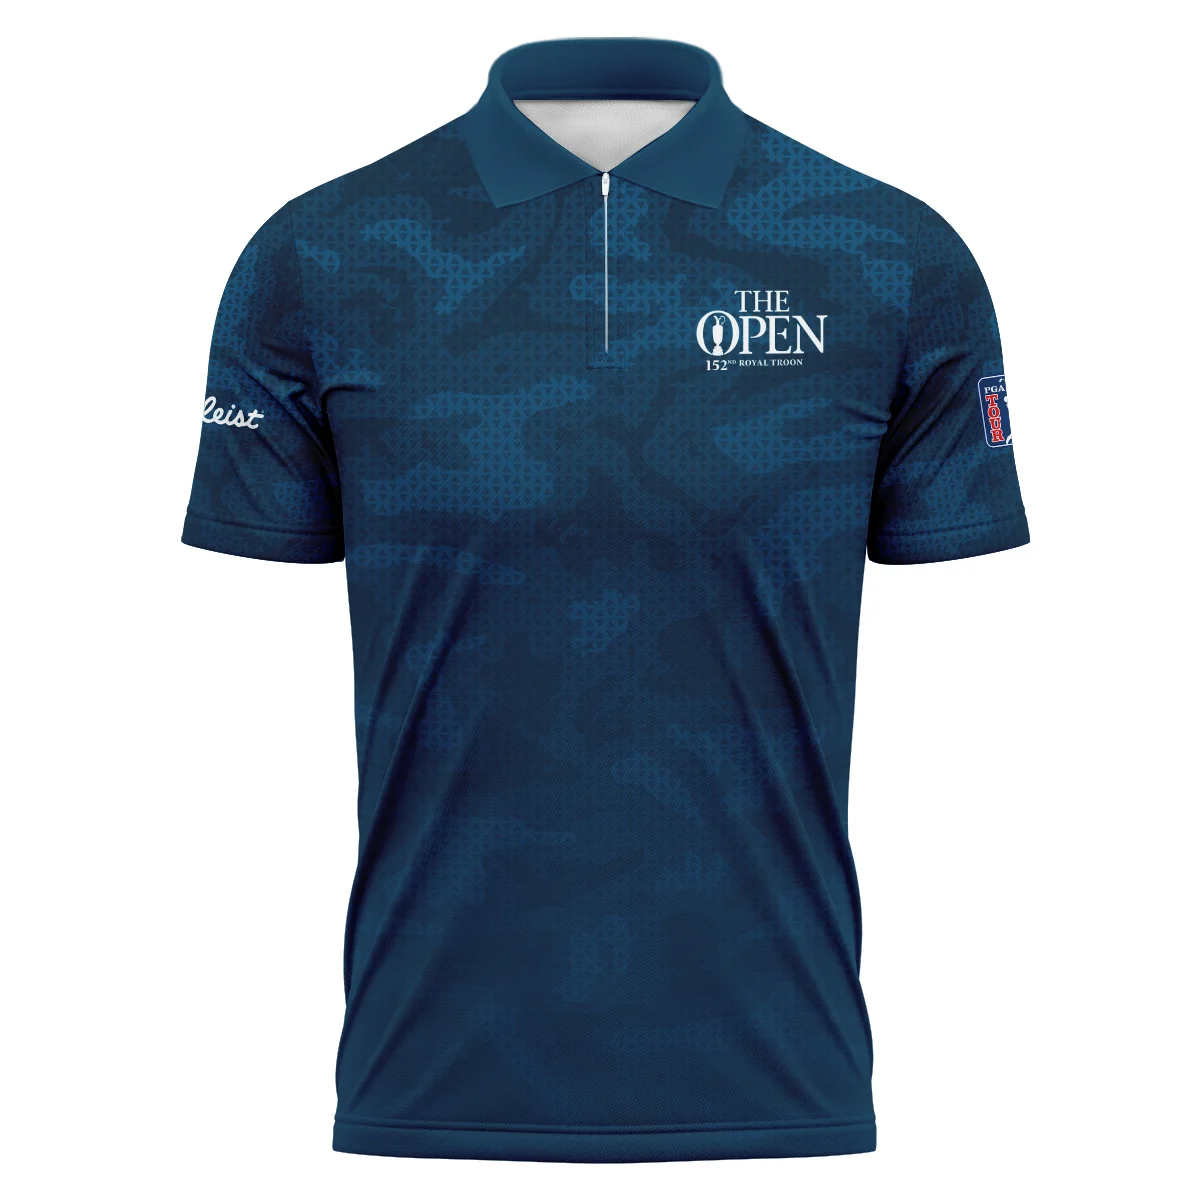 Titleist 152nd Open Championship Dark Blue Abstract Background Zipper Hoodie Shirt All Over Prints HOTOP260624A02TLZHD